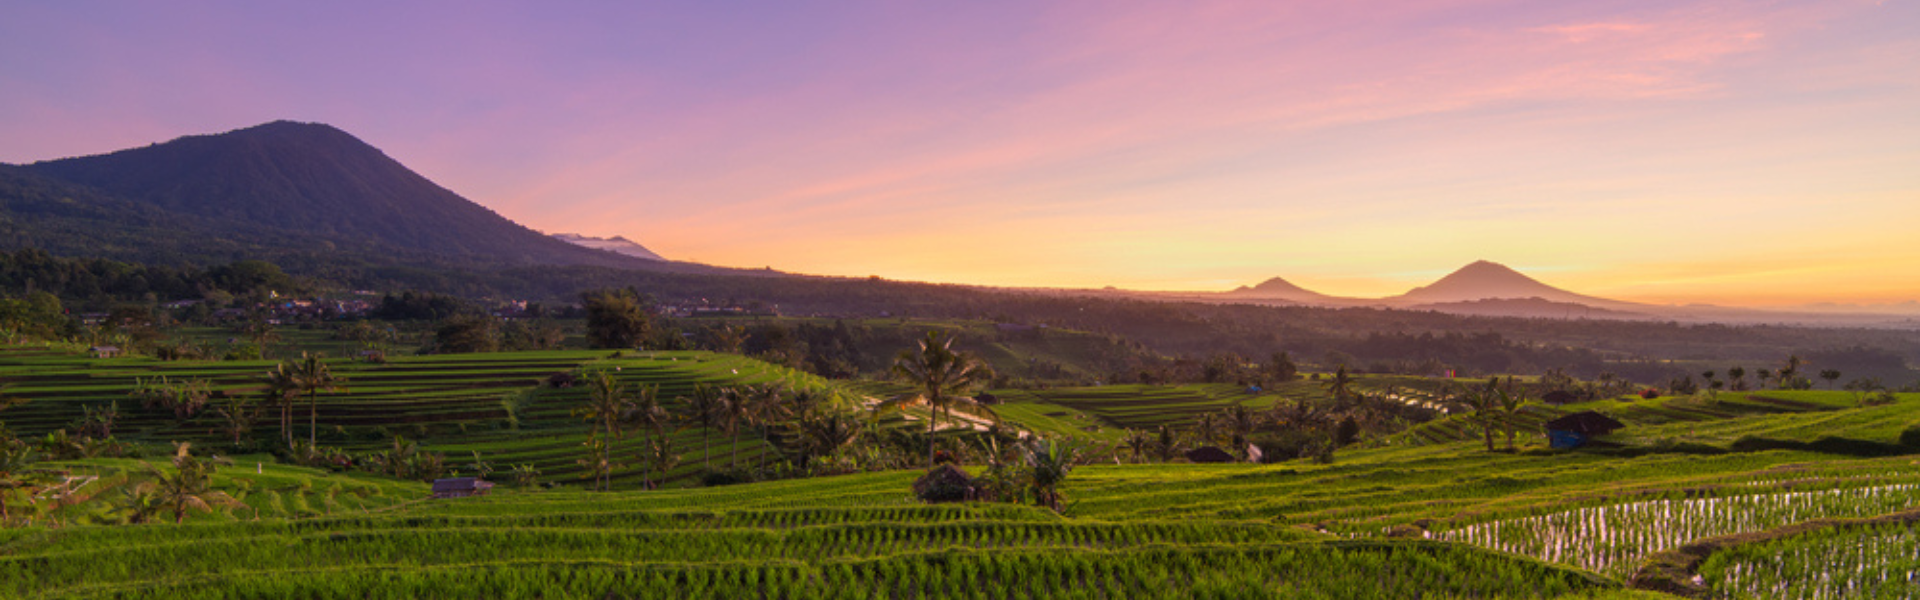 Indonesia_Bali_Jatiluwih Rice Terraces_Sunrise